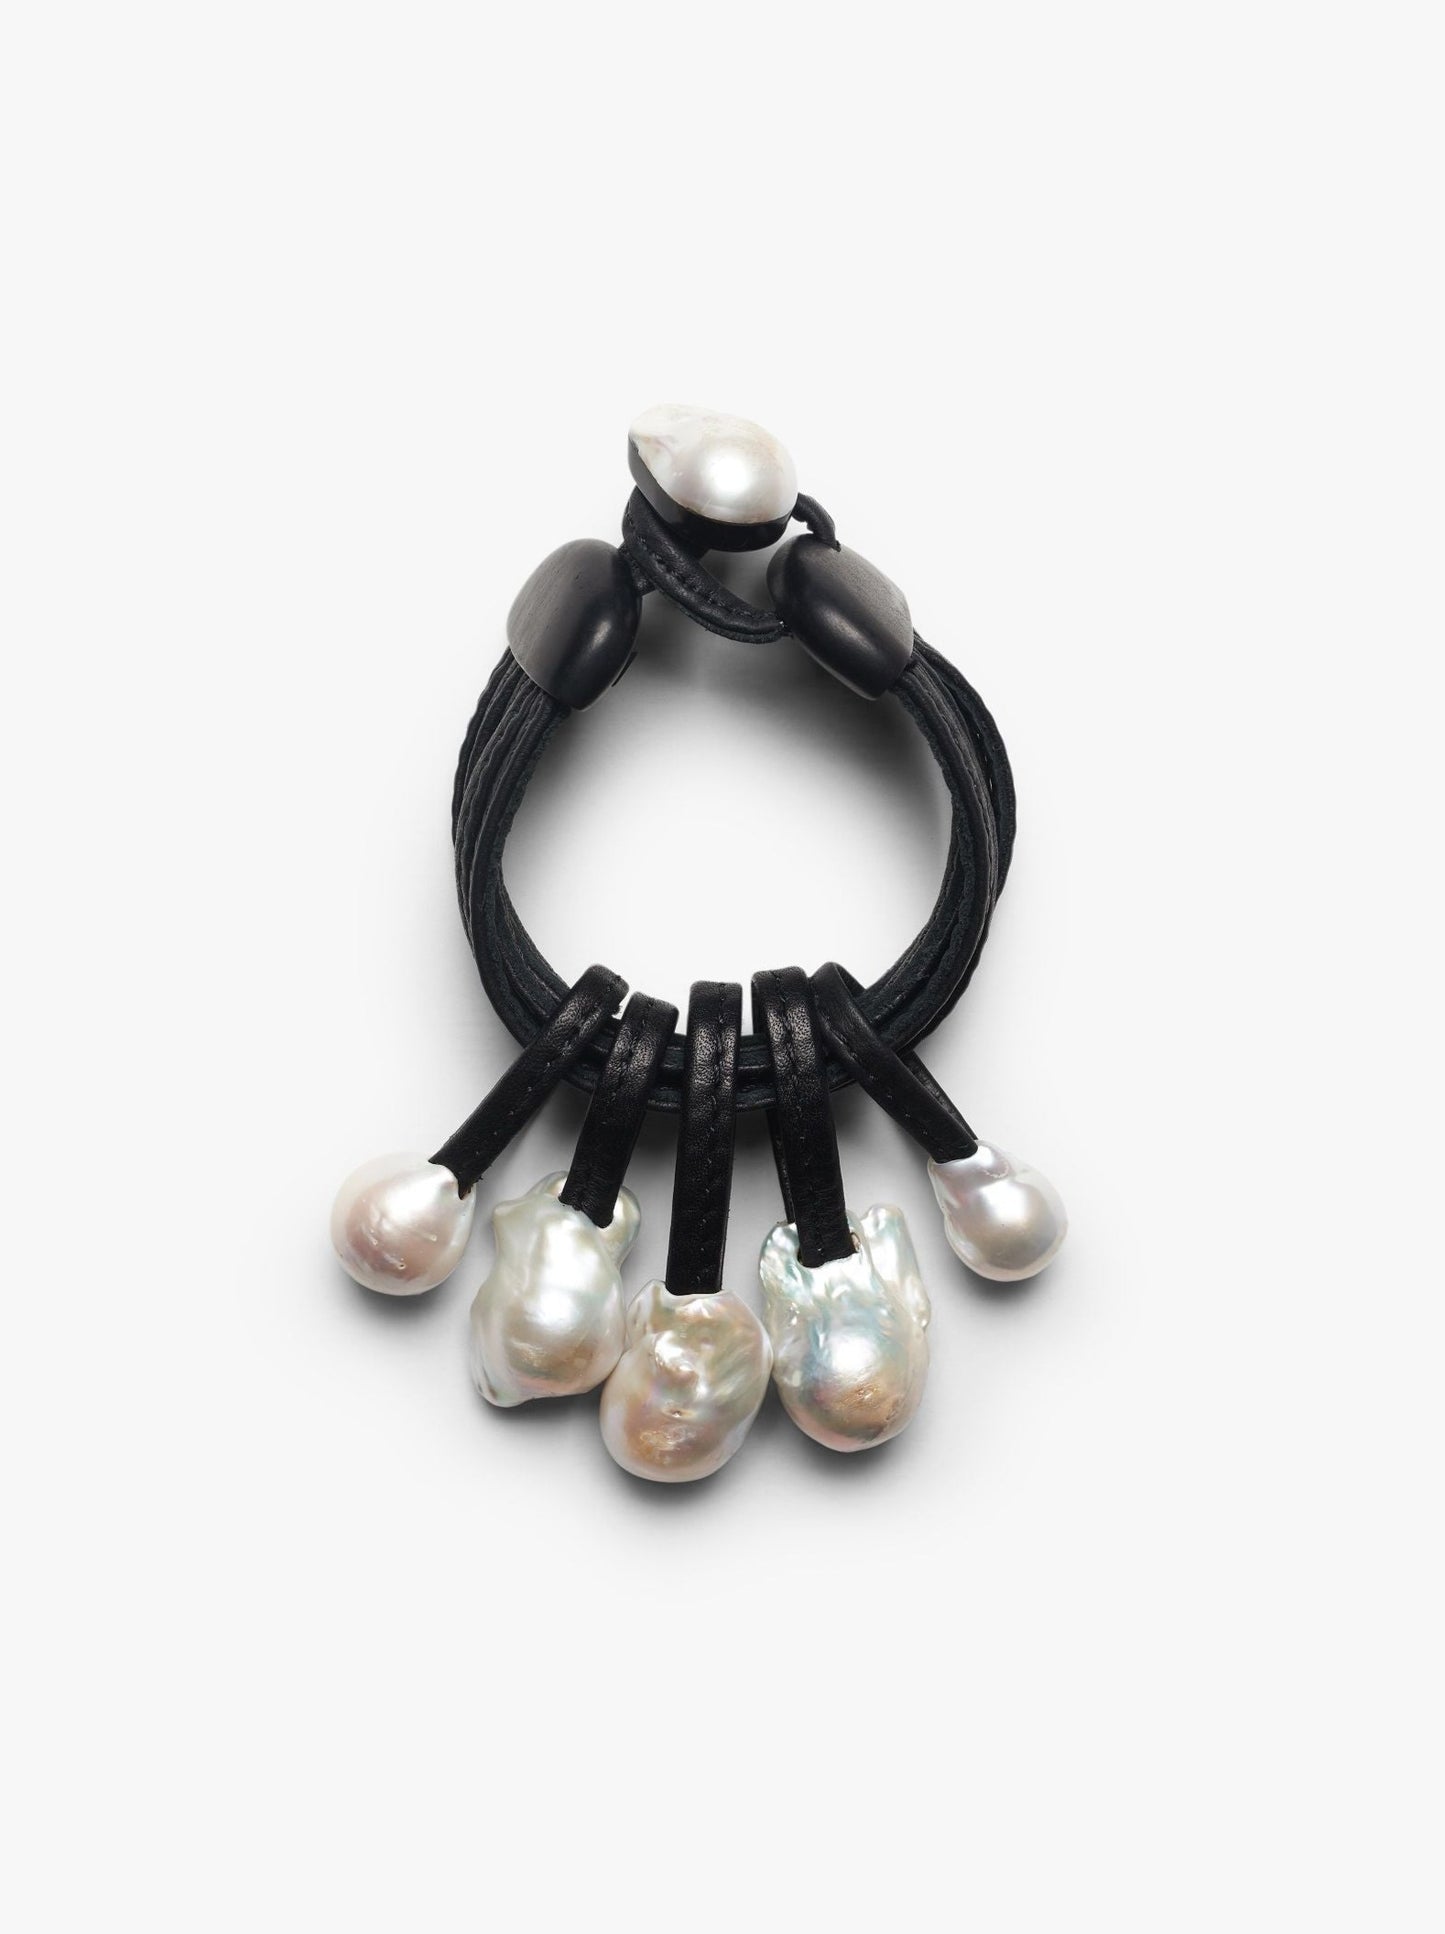 Bracelet: baroque pearls, leather